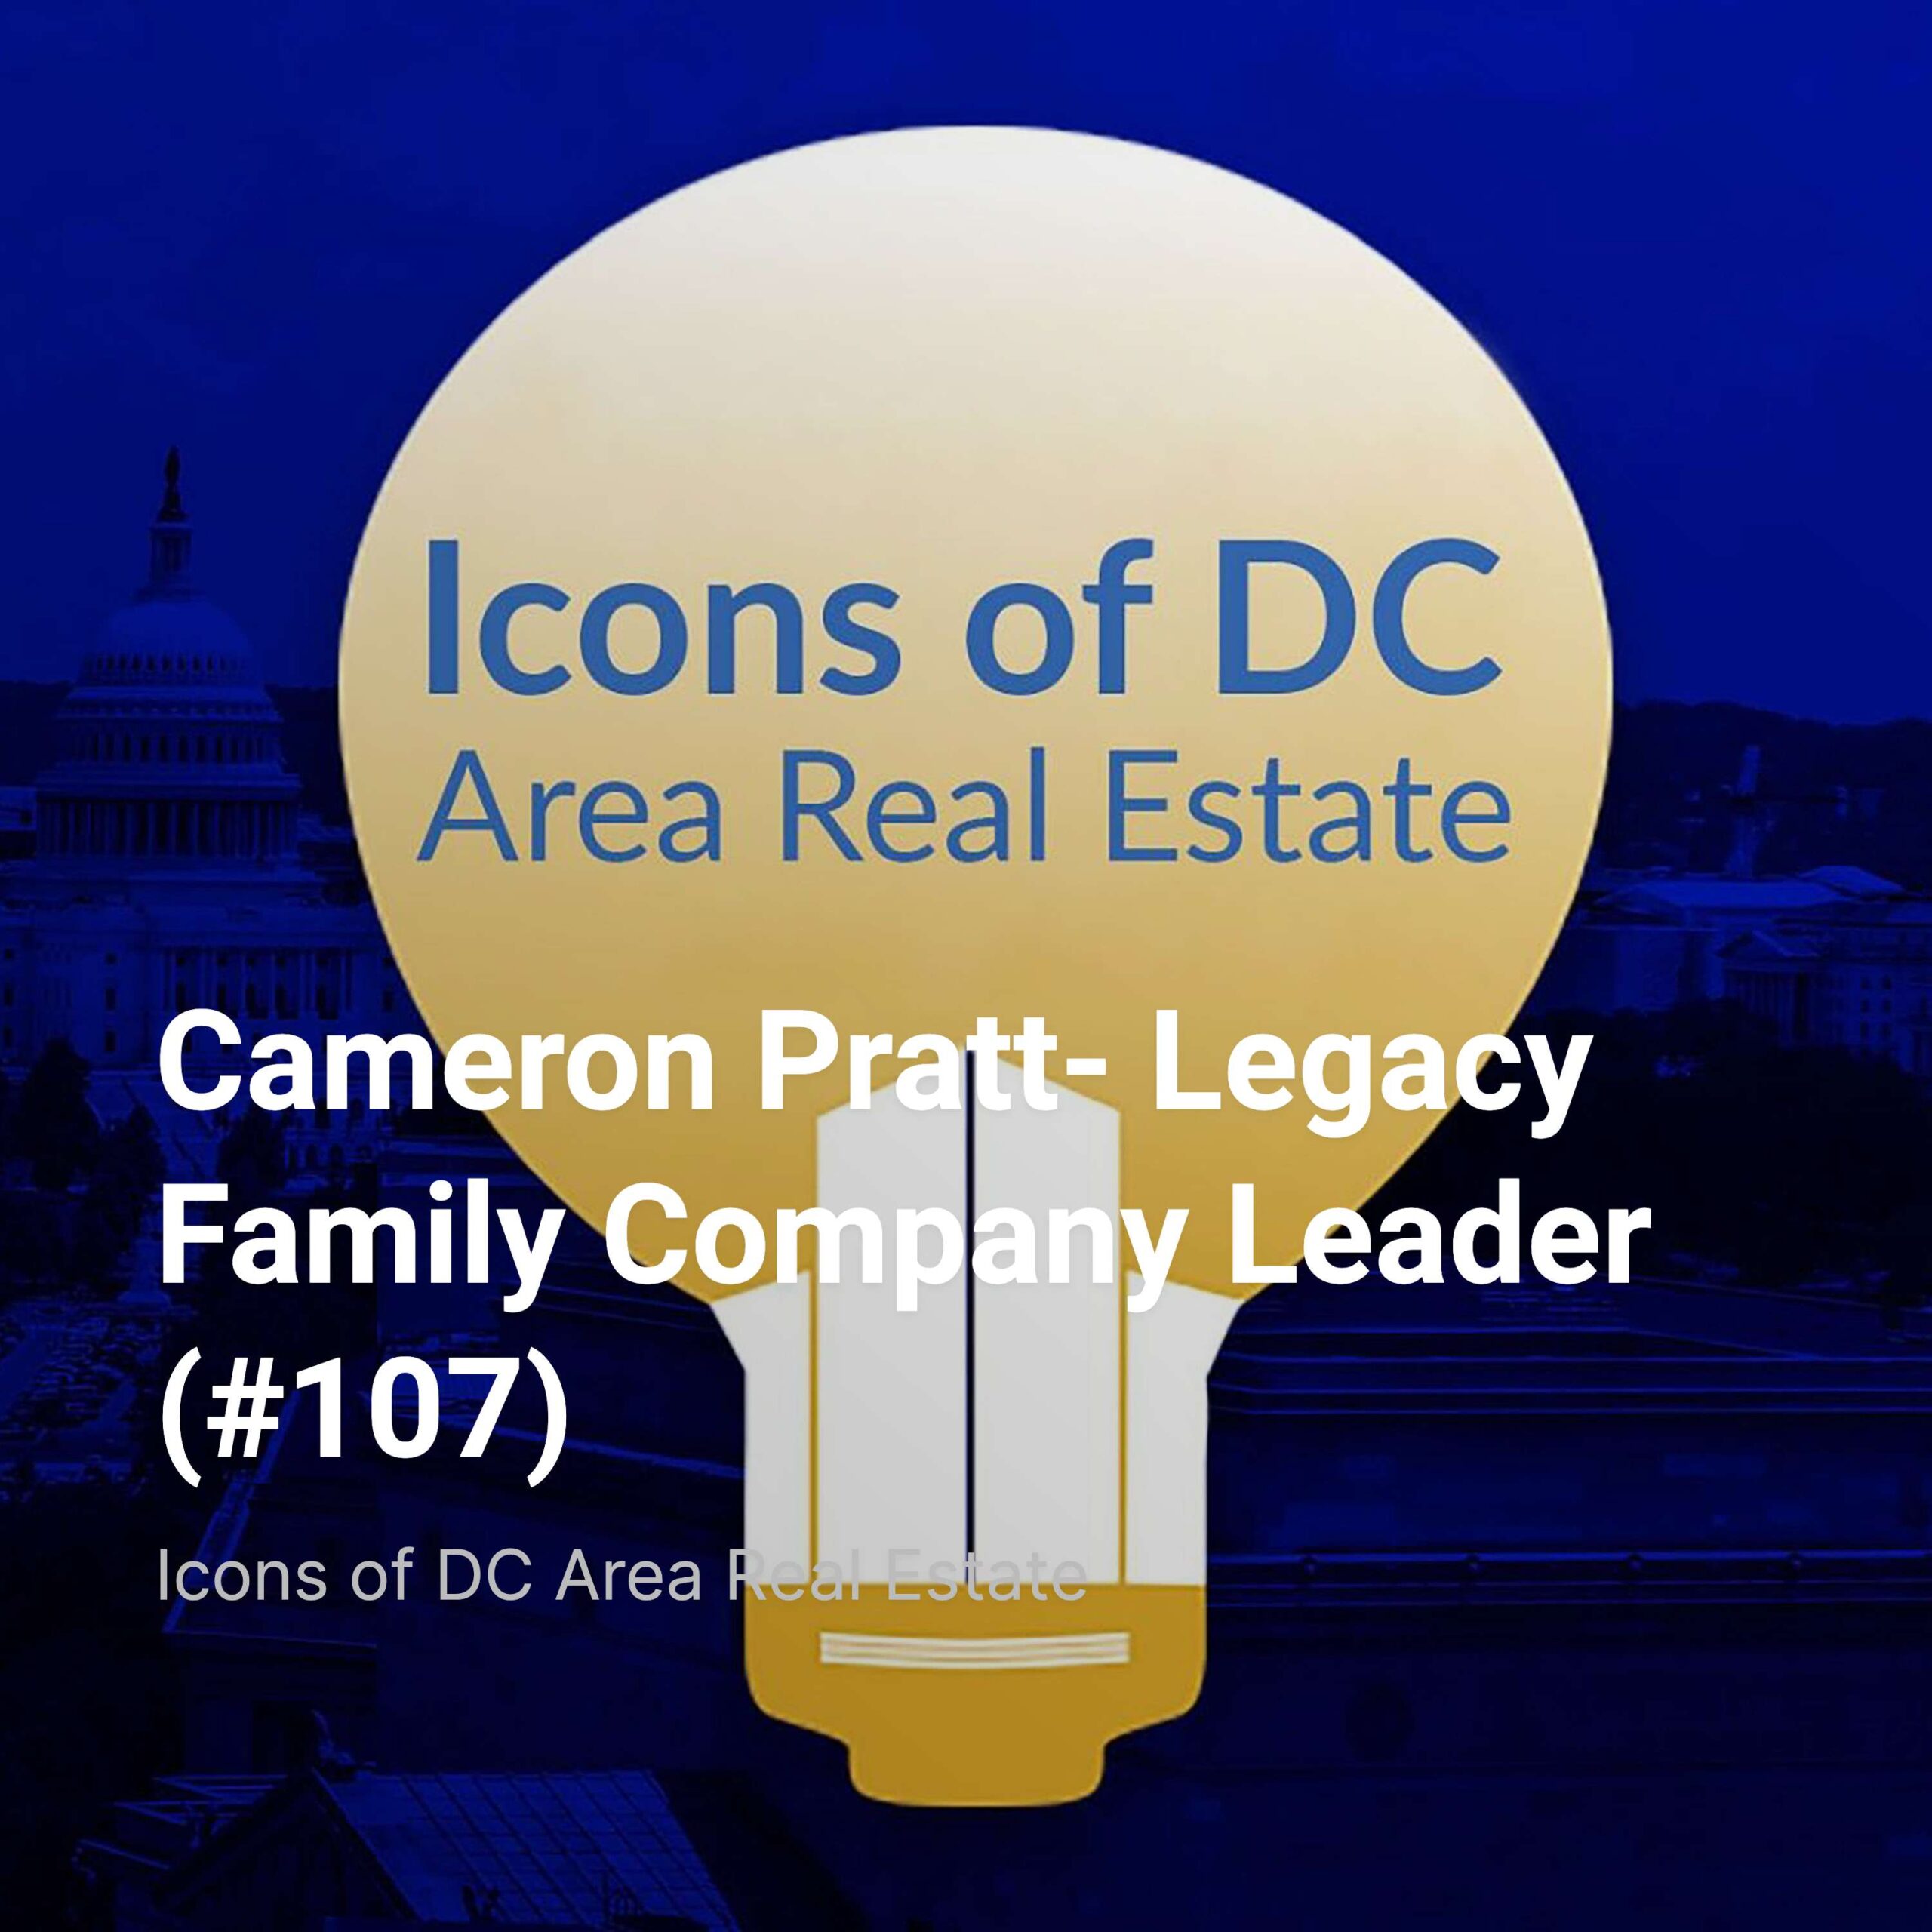 Cameron Pratt- Legacy Family Company Leader (#107)